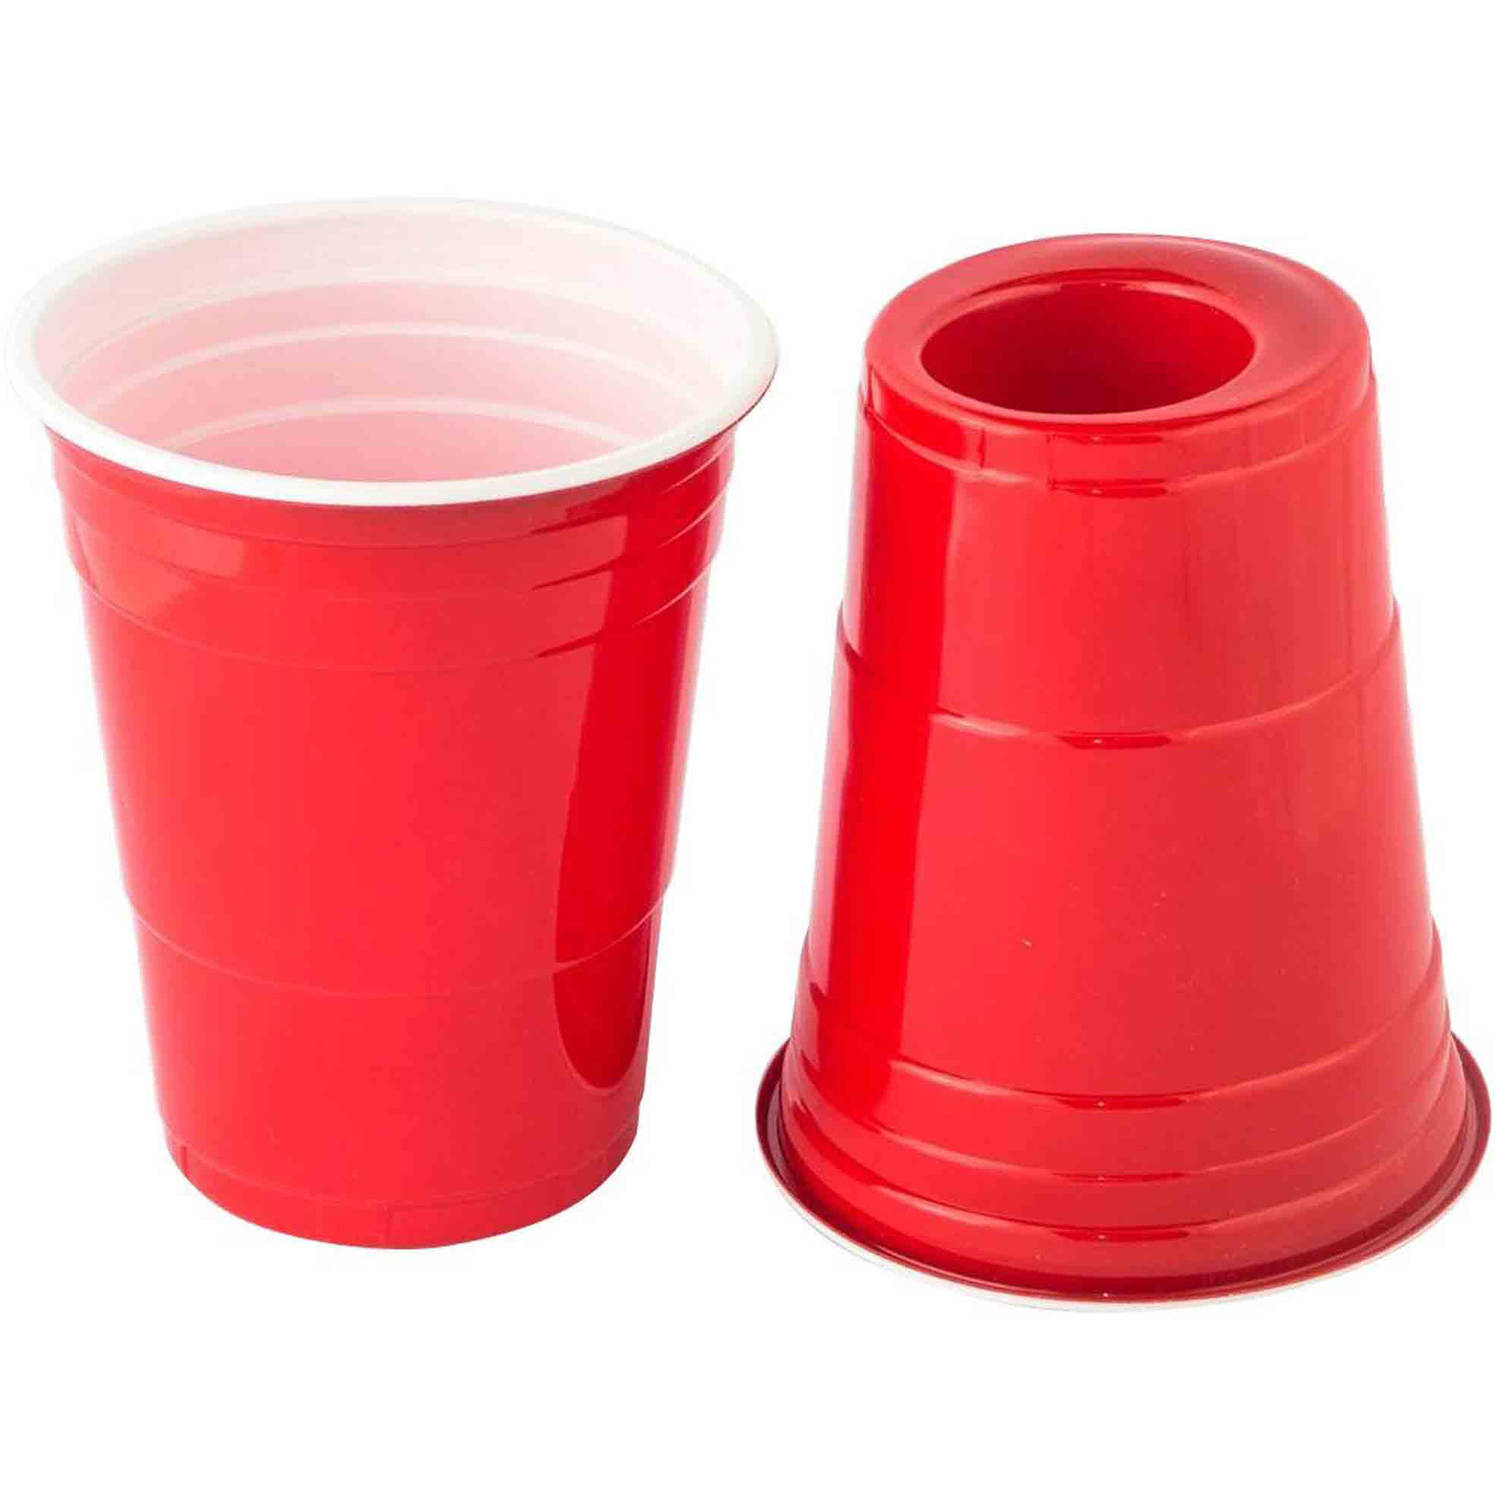 3/4 Cup (180 ml, 180 cc